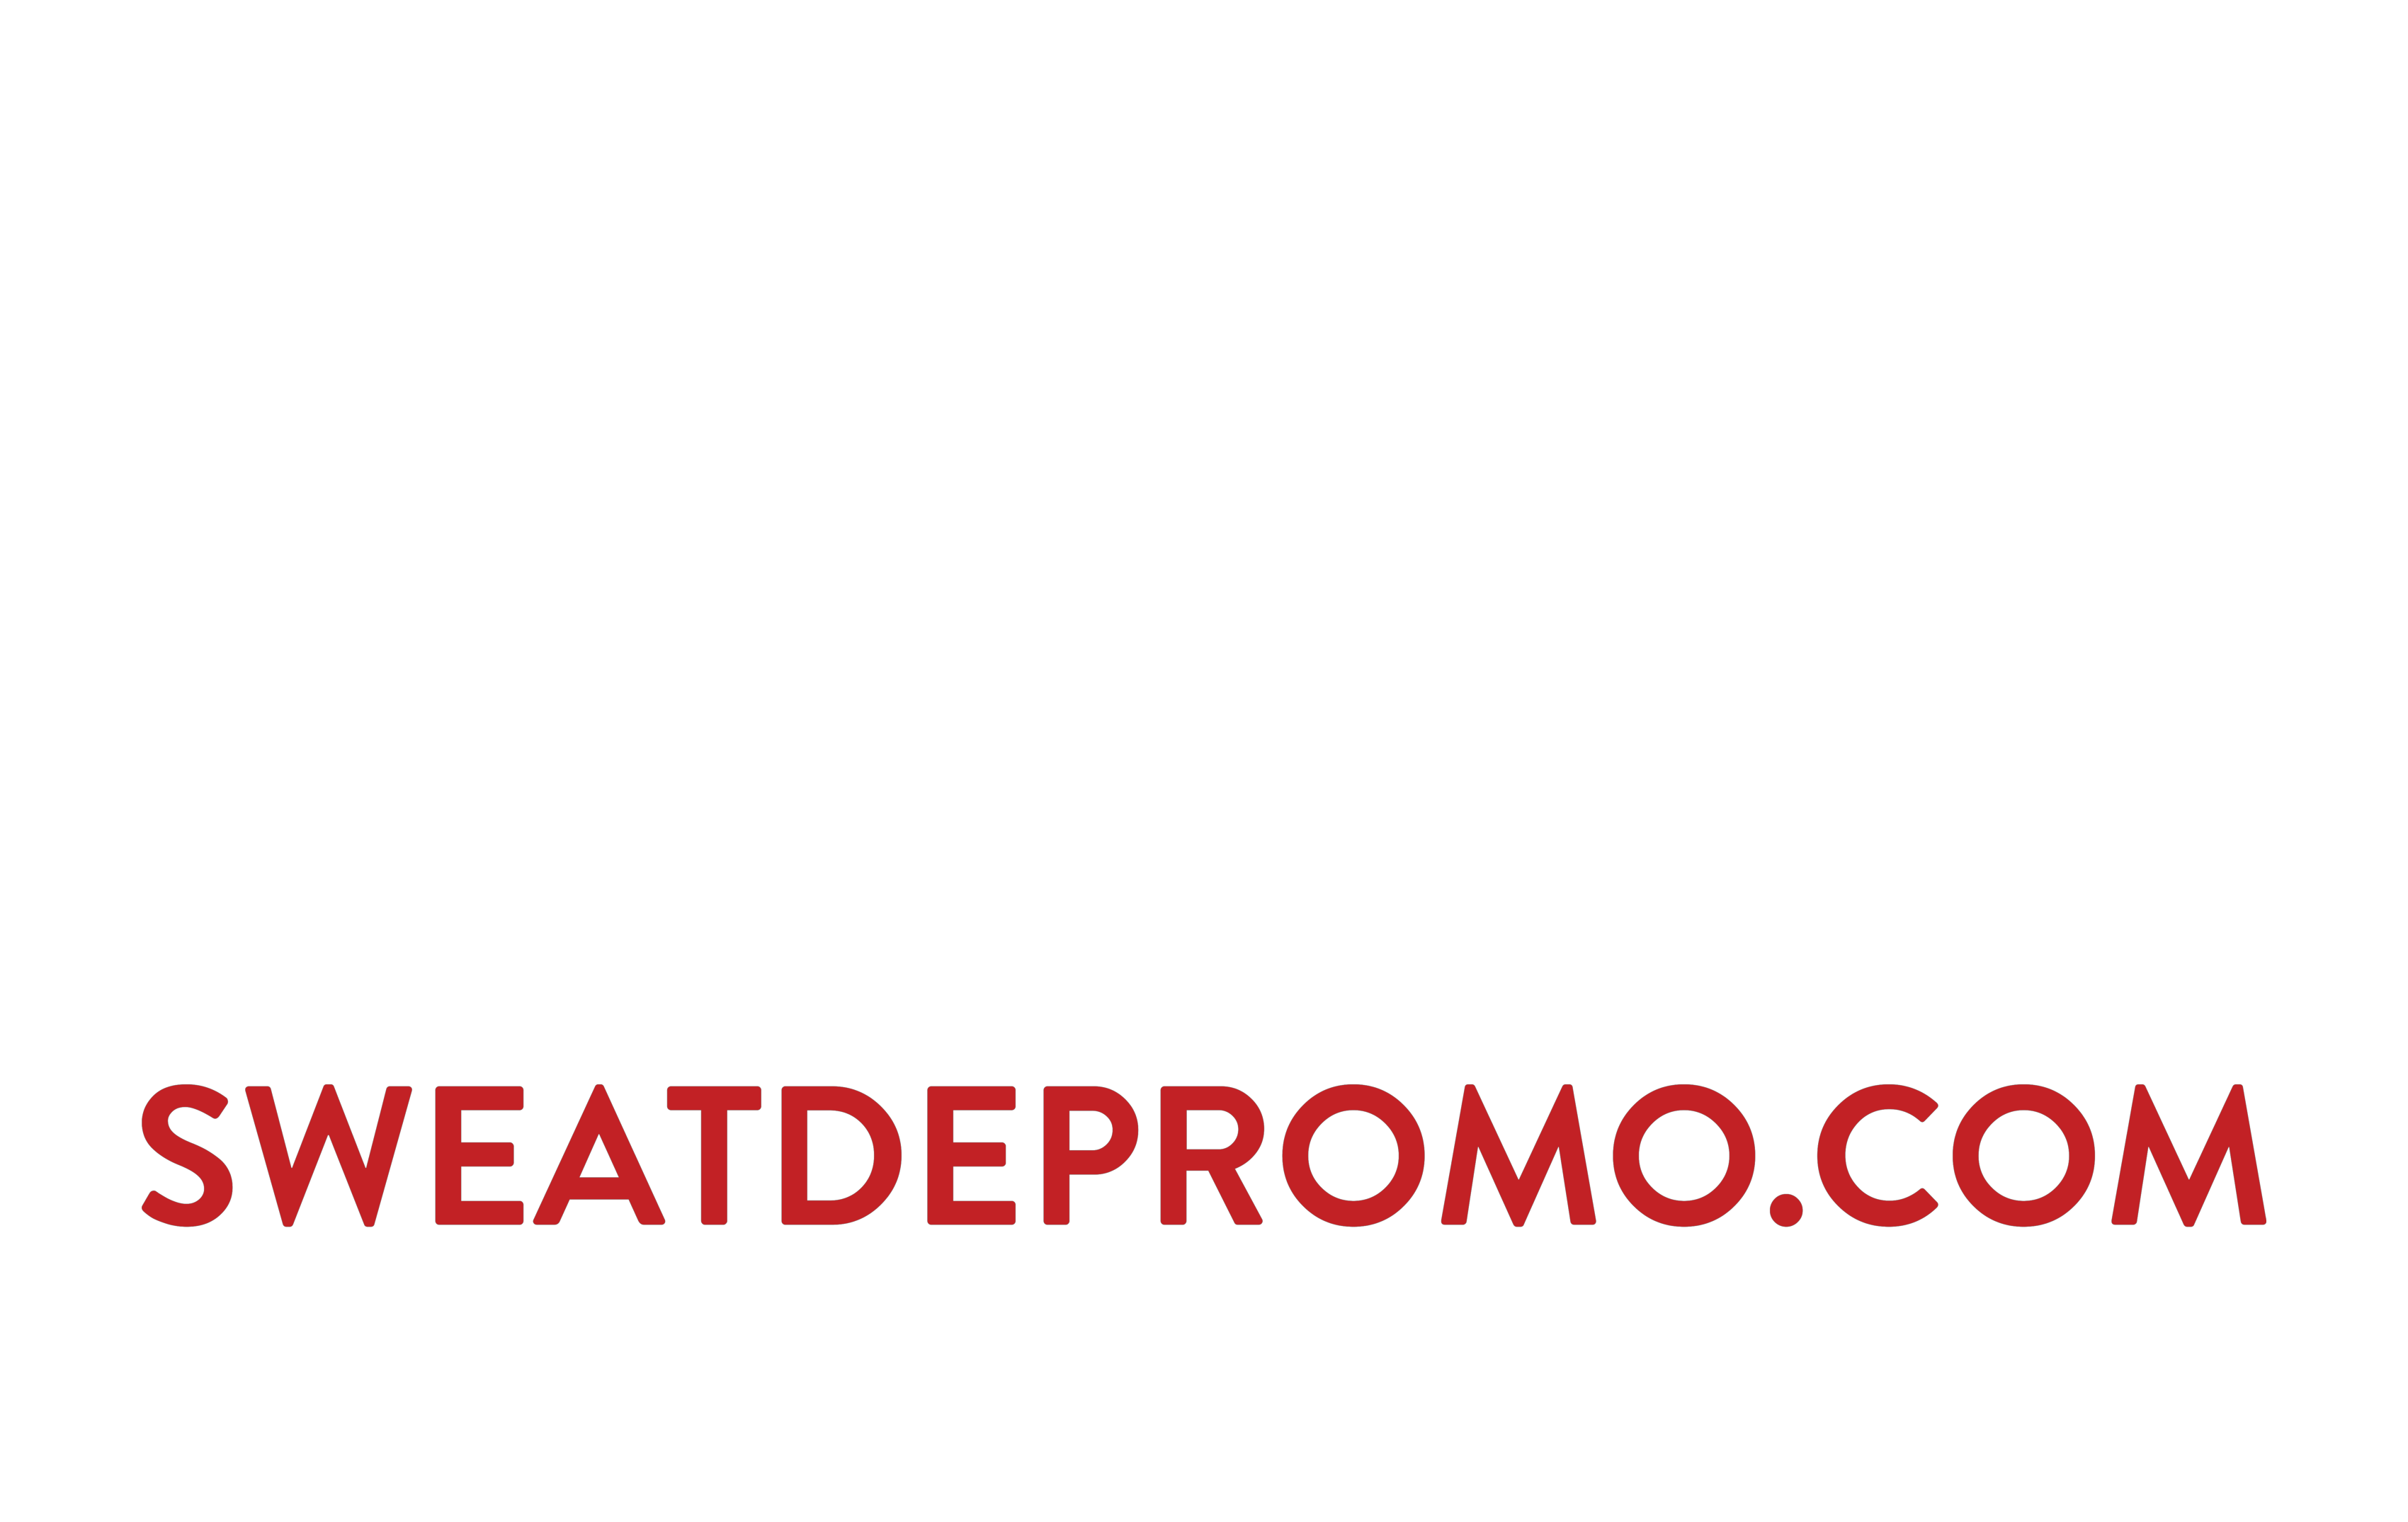 Sweatdepromo.com